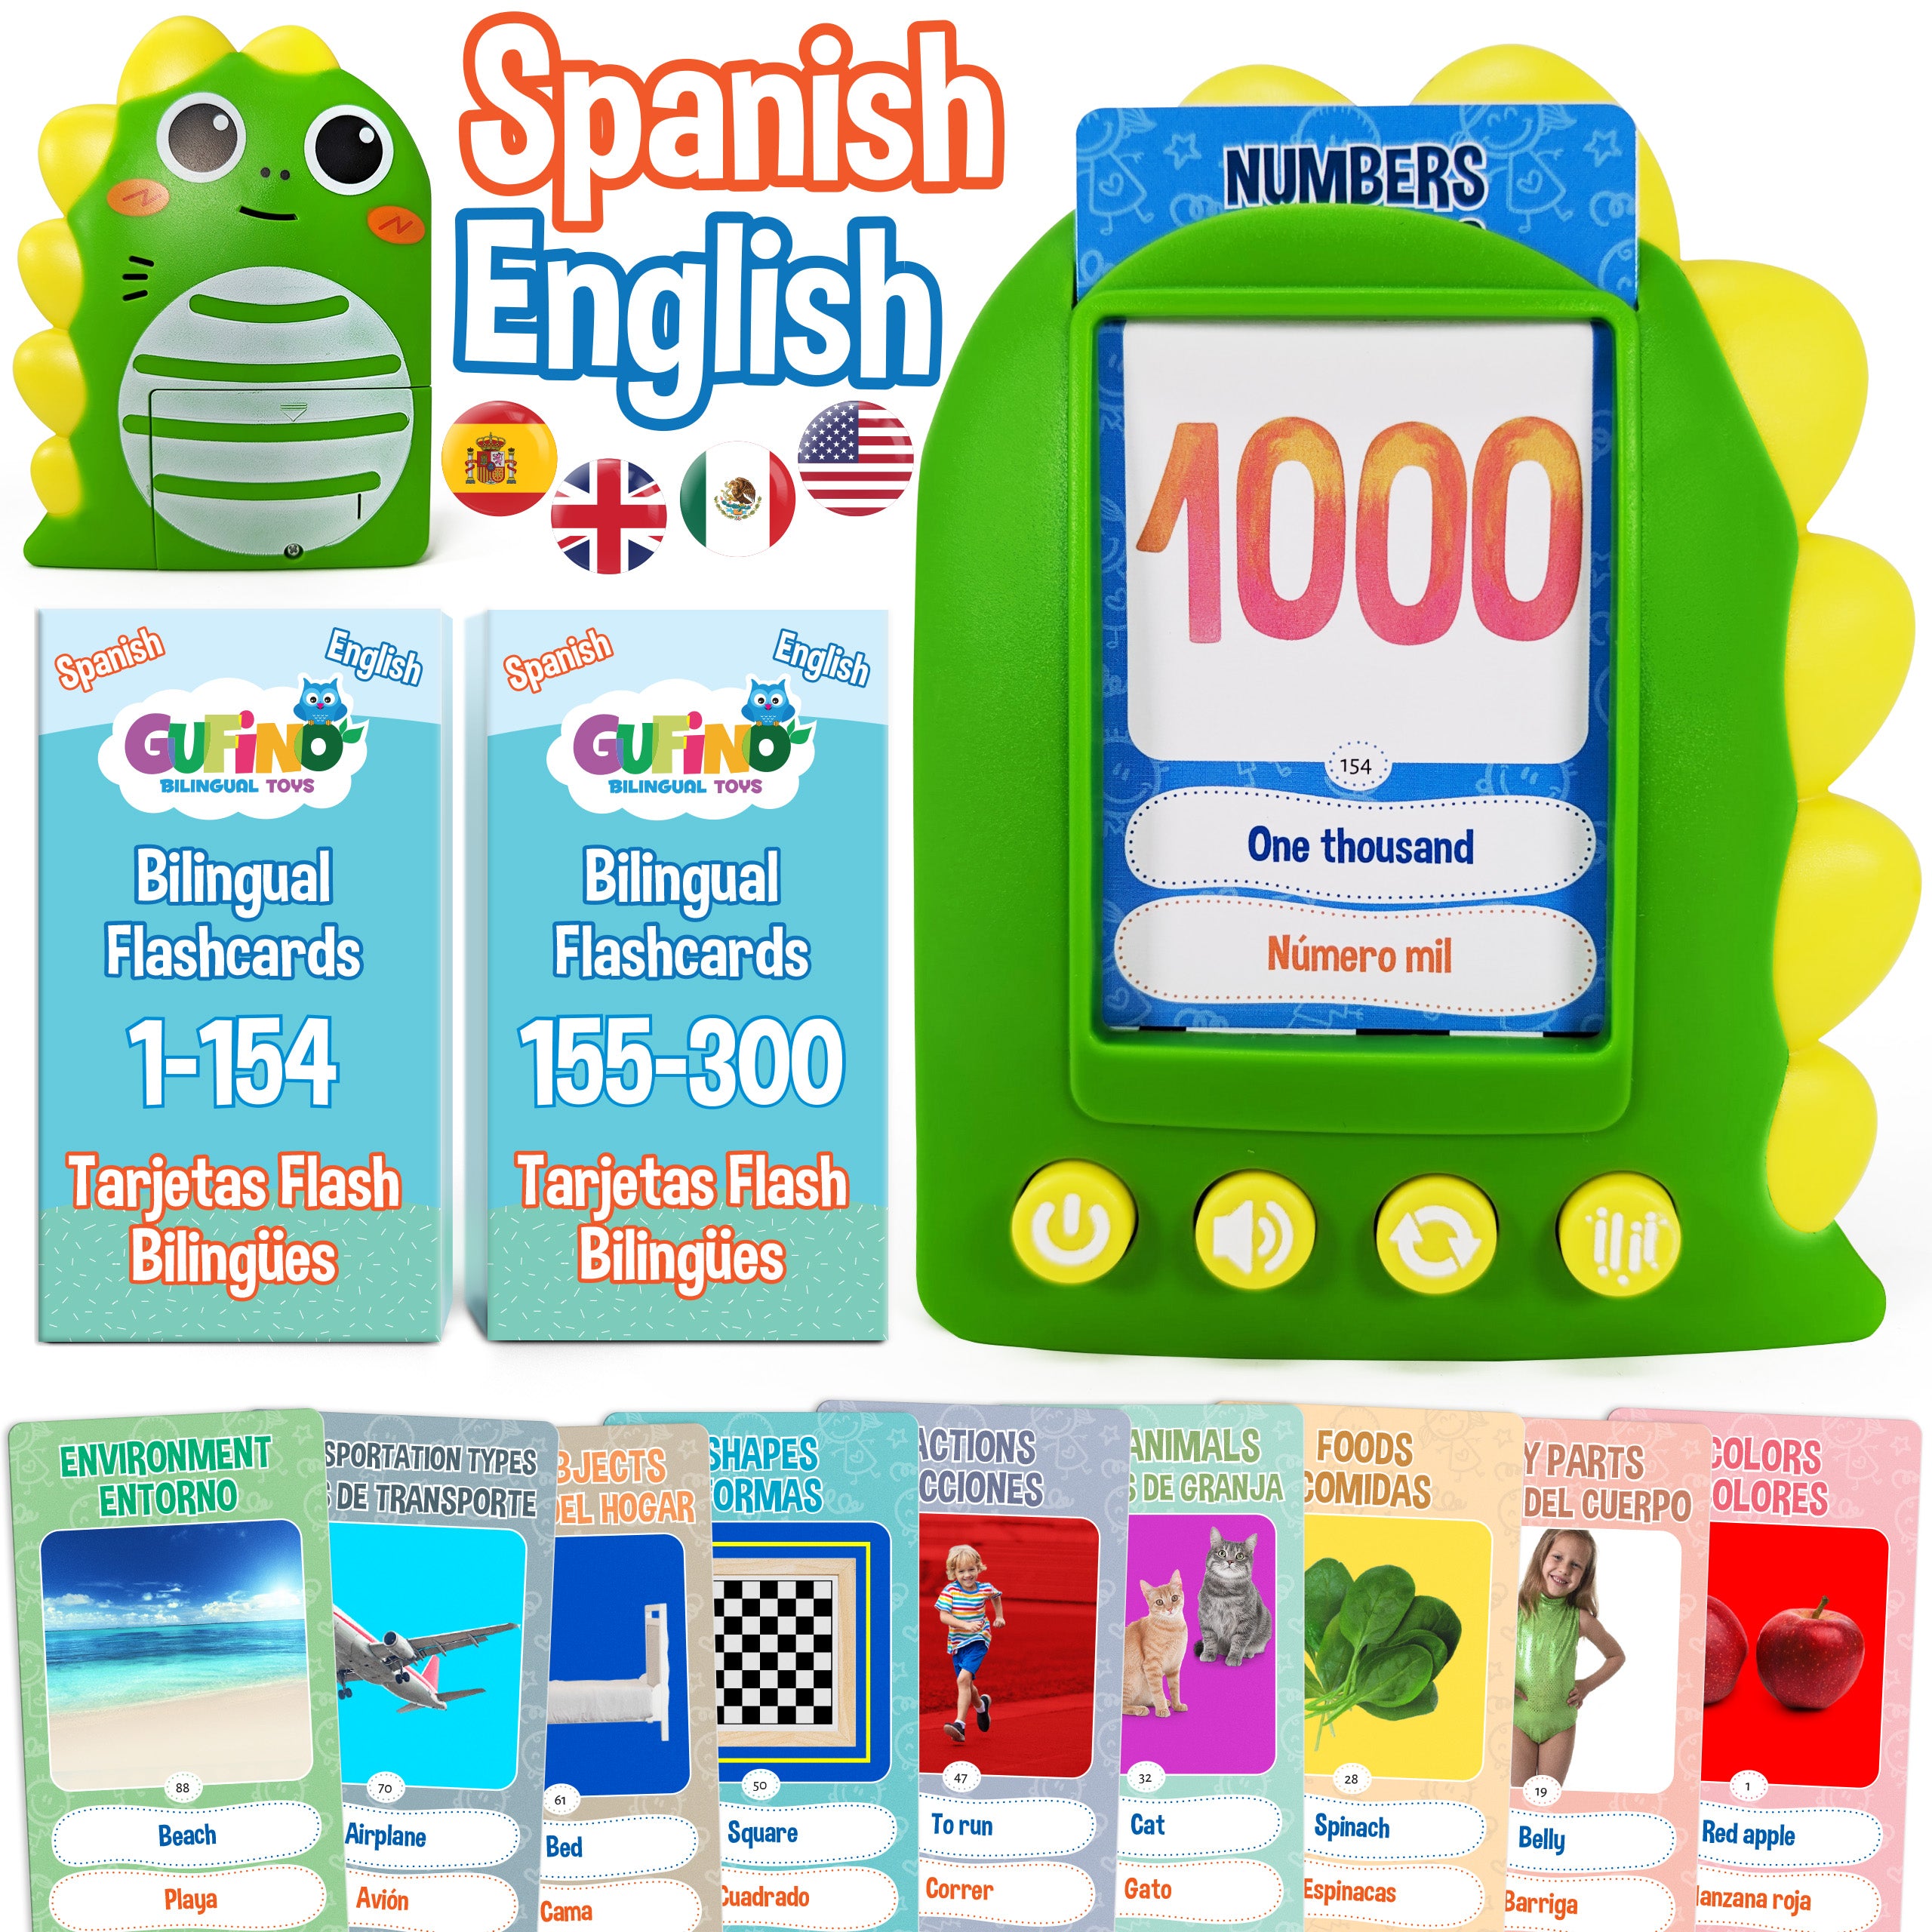 English & Spanish Flash Cards for Kids - Gufino Bilingual Learning